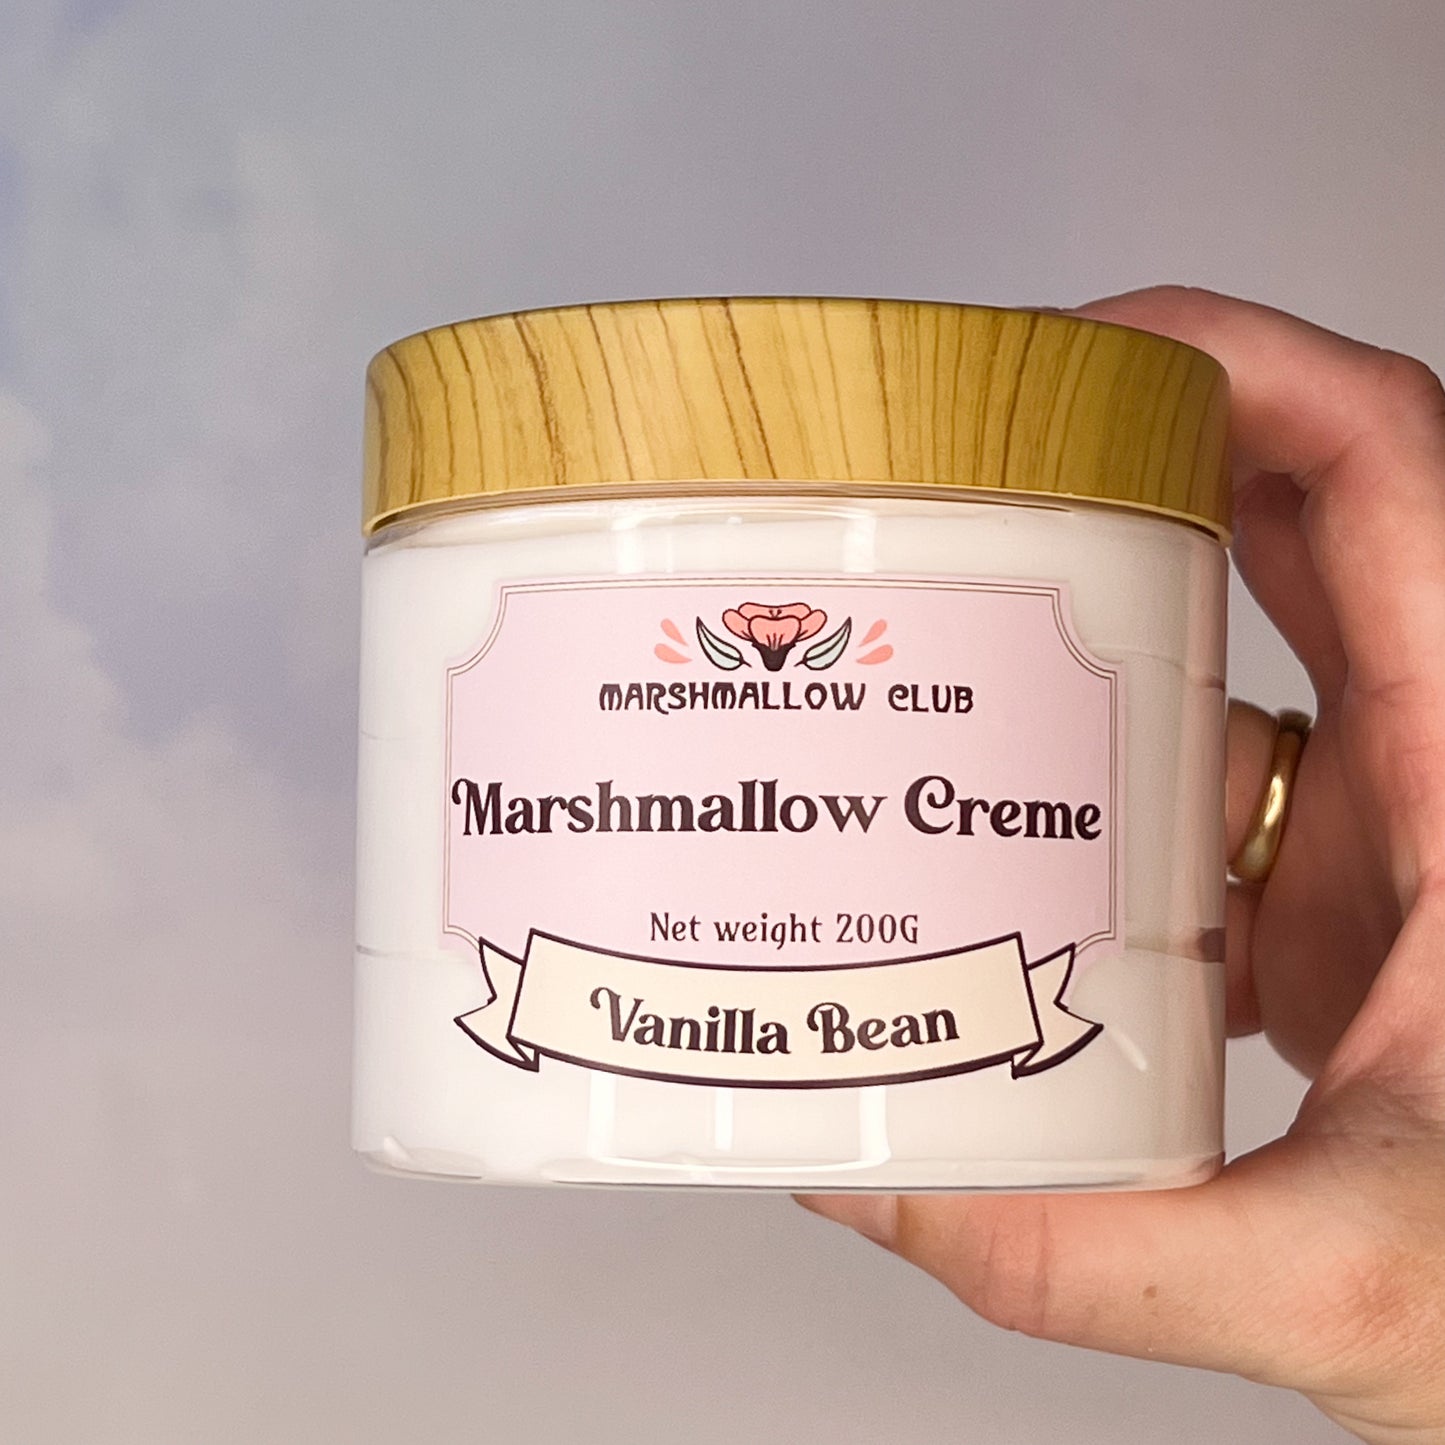 Handmade marshmallow creme